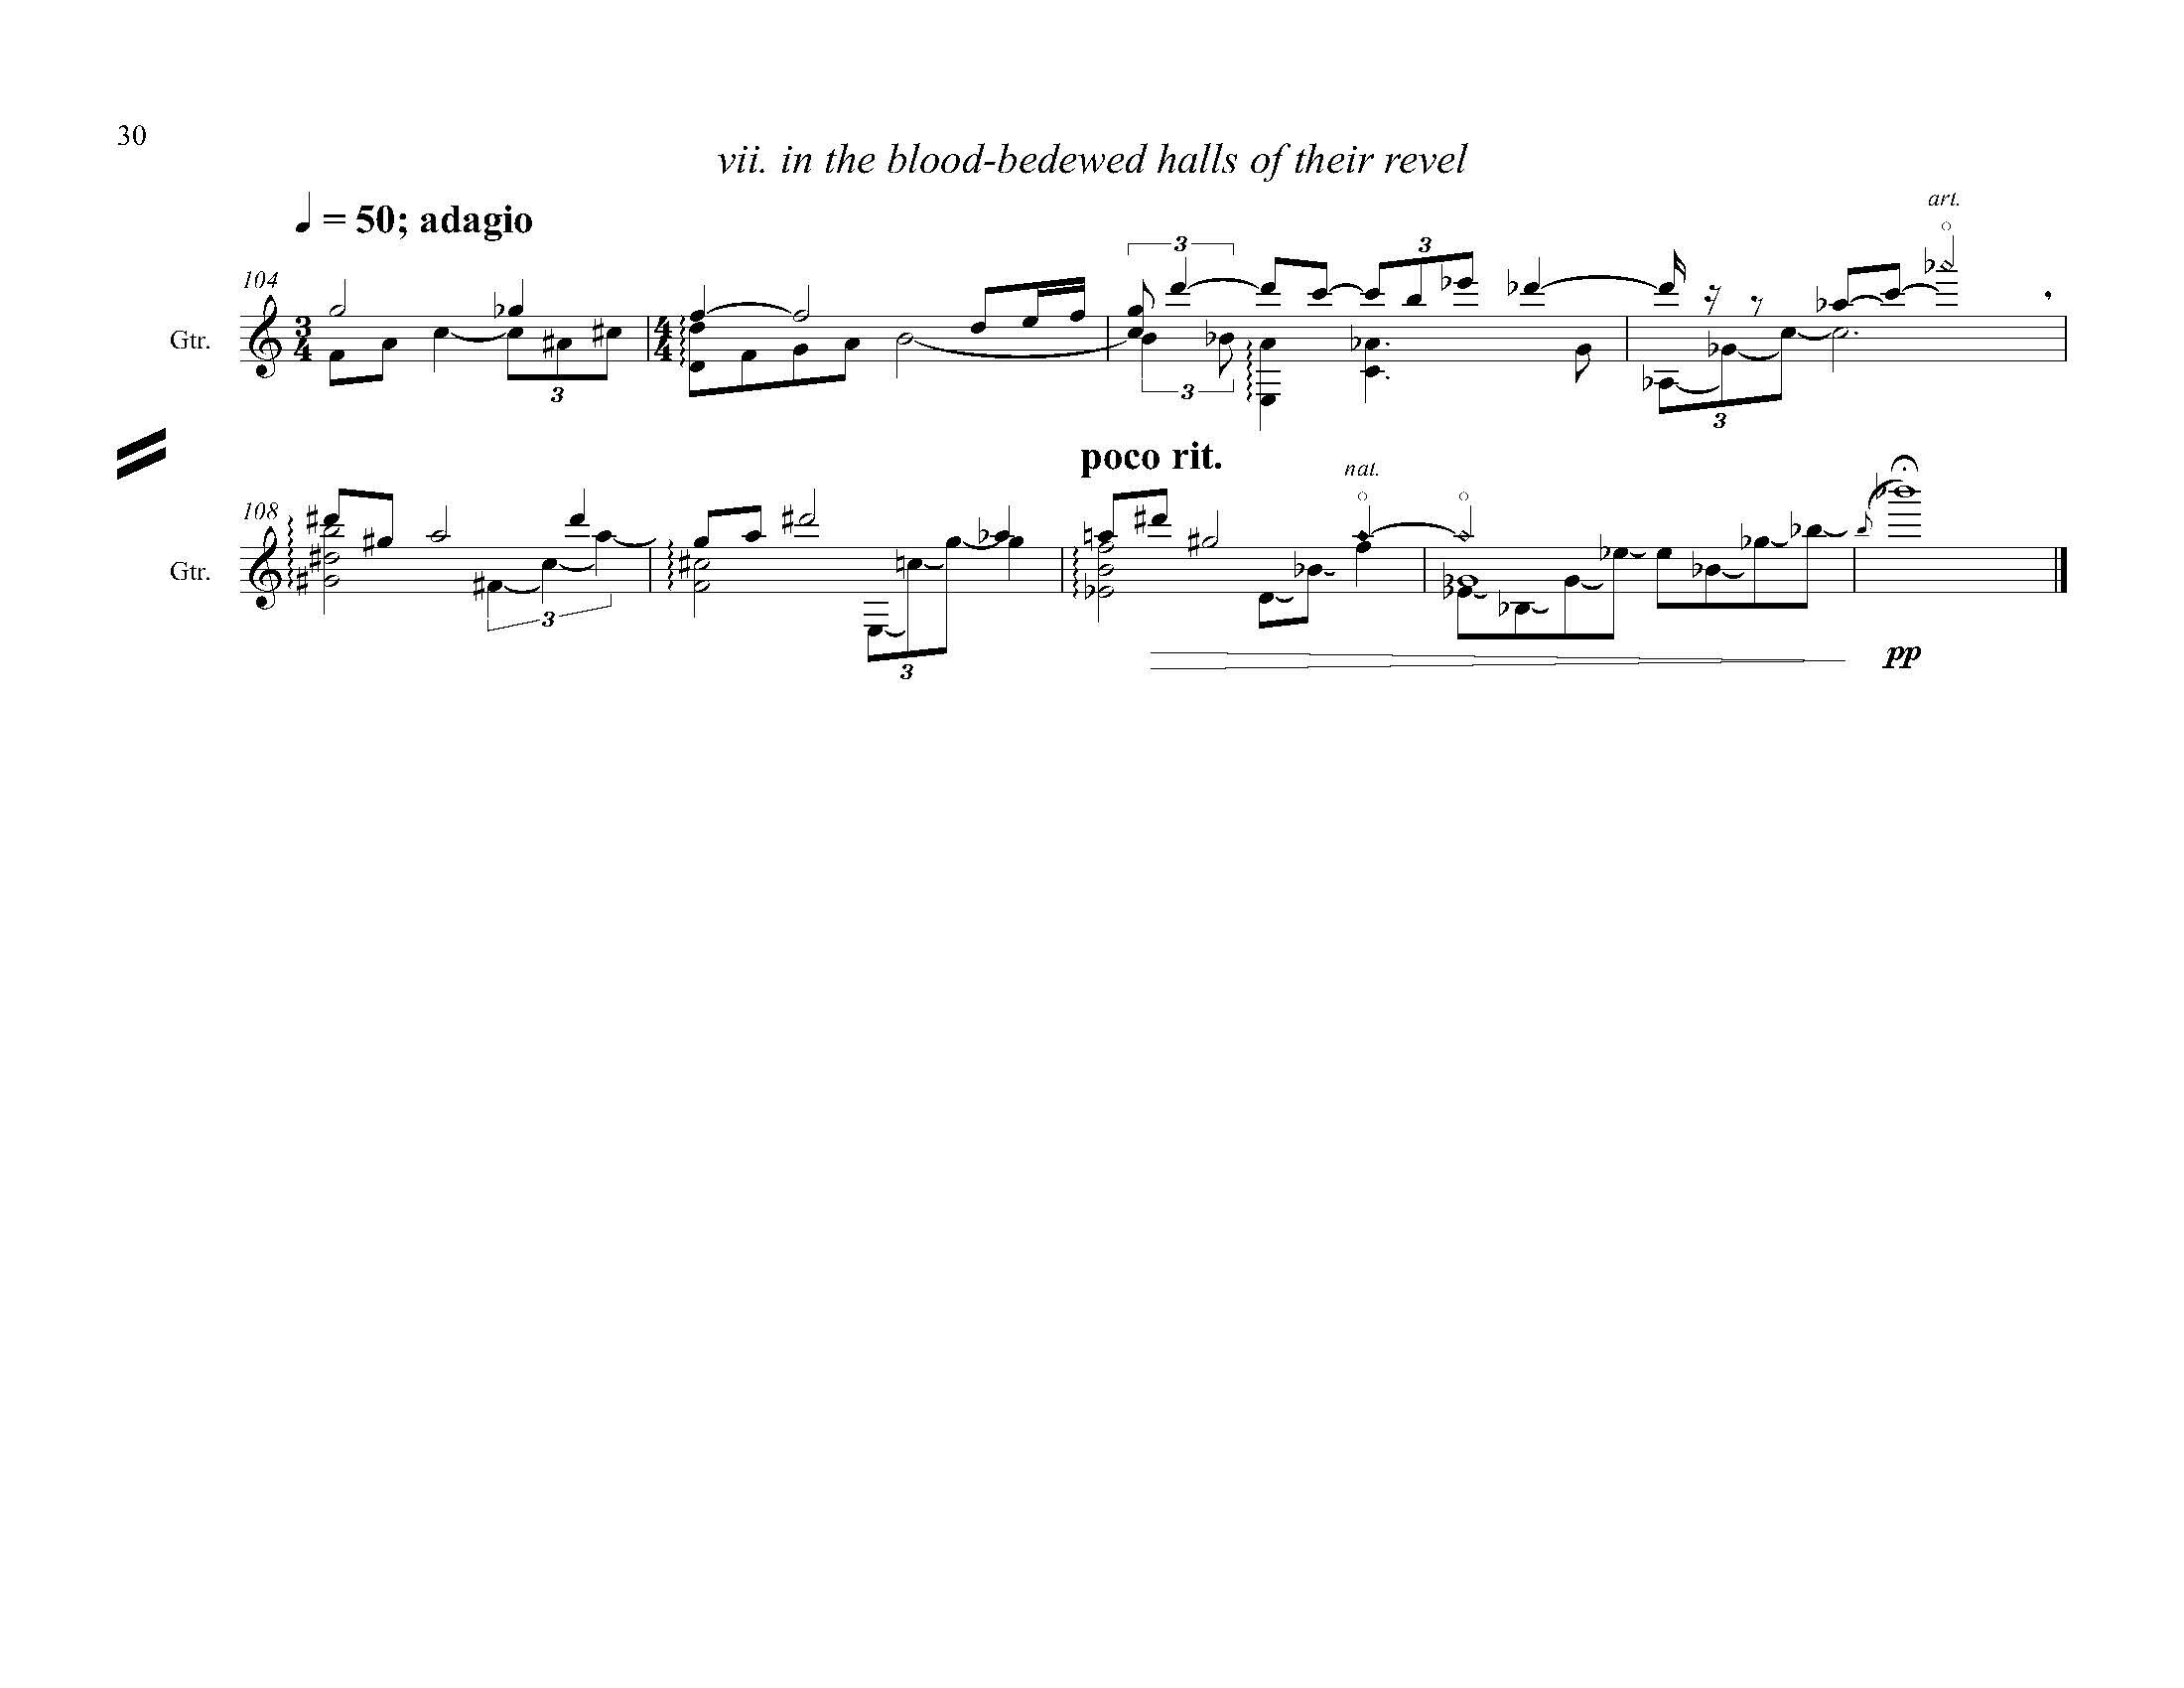 Prince Prospero - Complete Score_Page_36.jpg